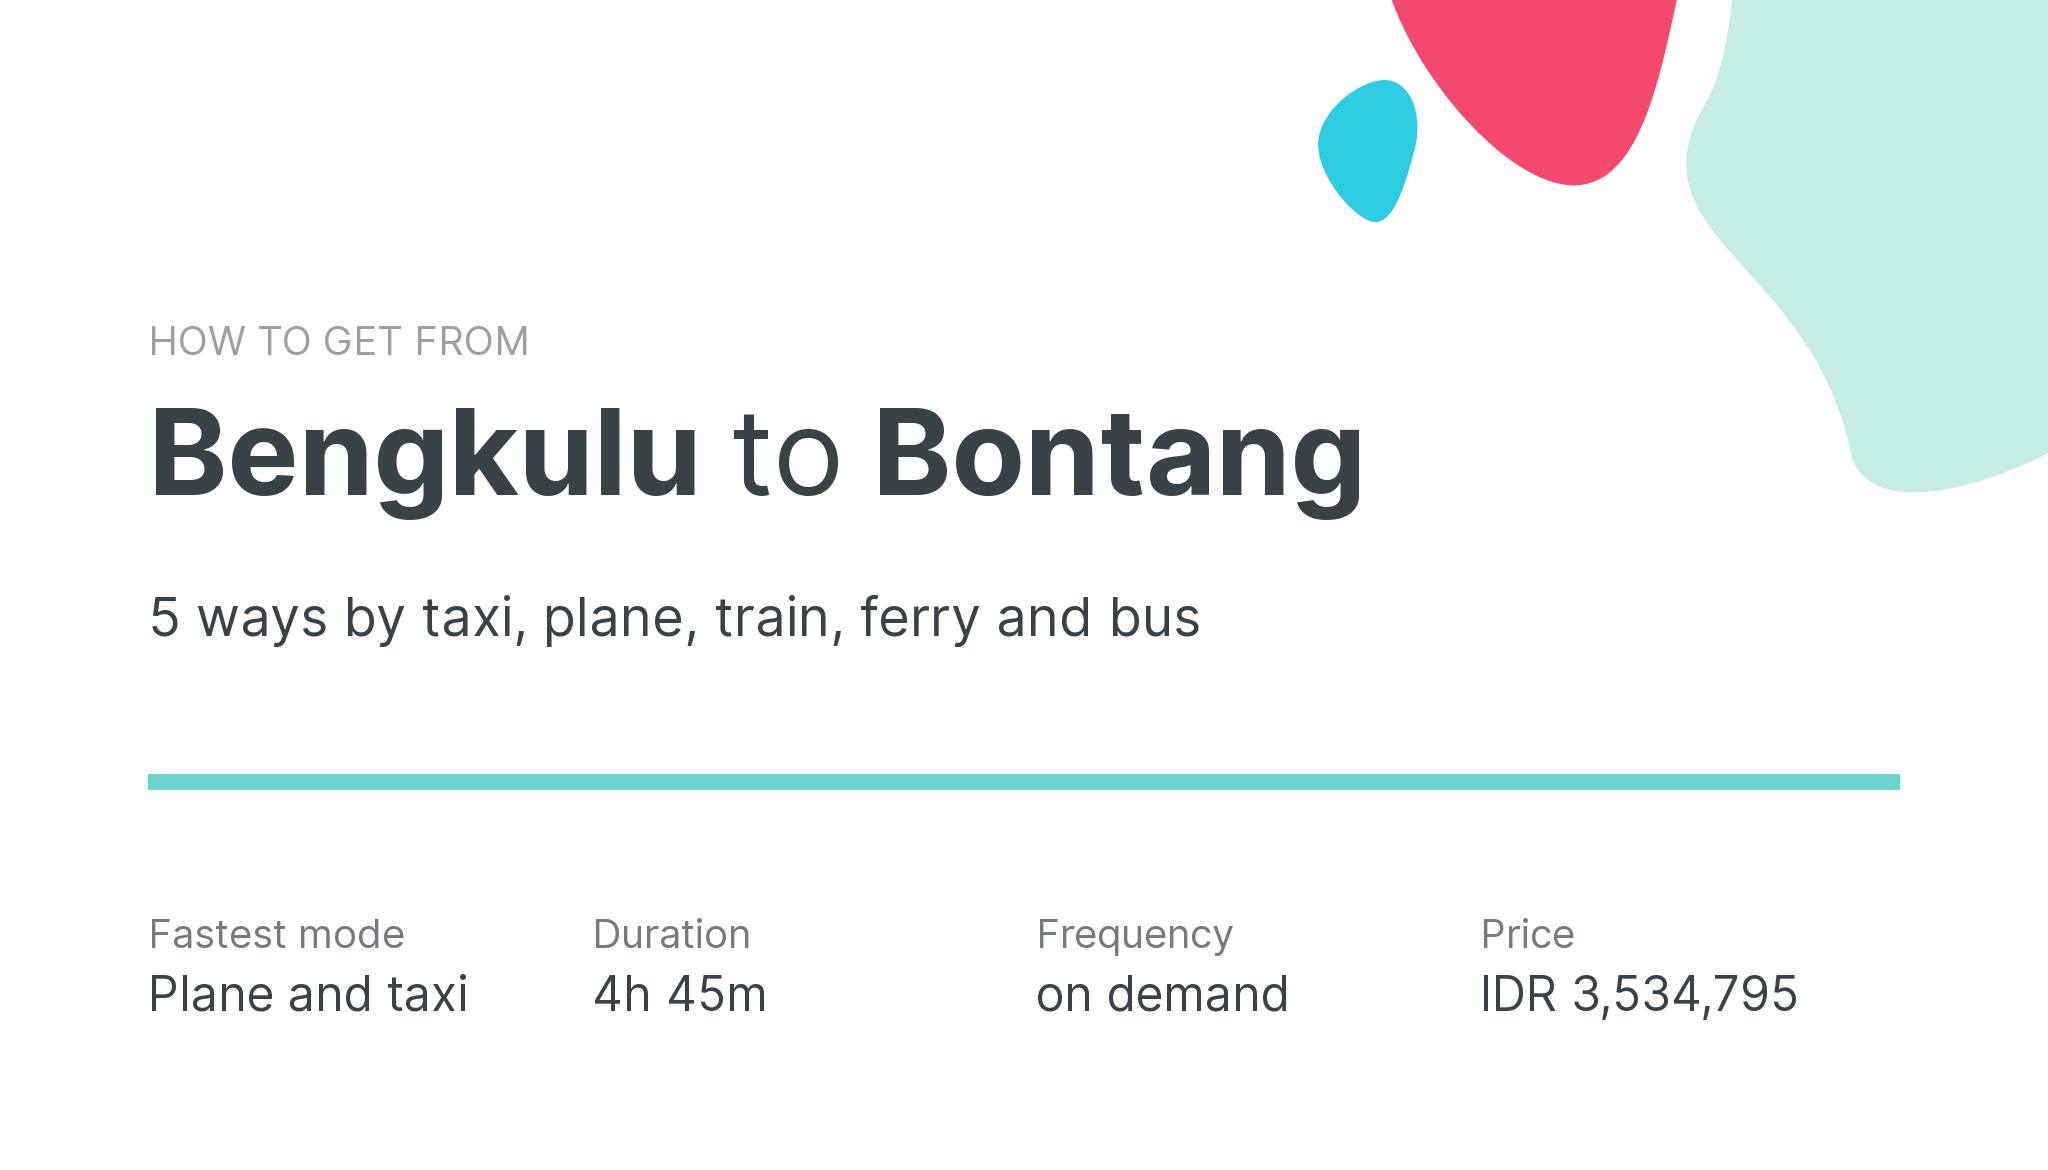 How do I get from Bengkulu to Bontang